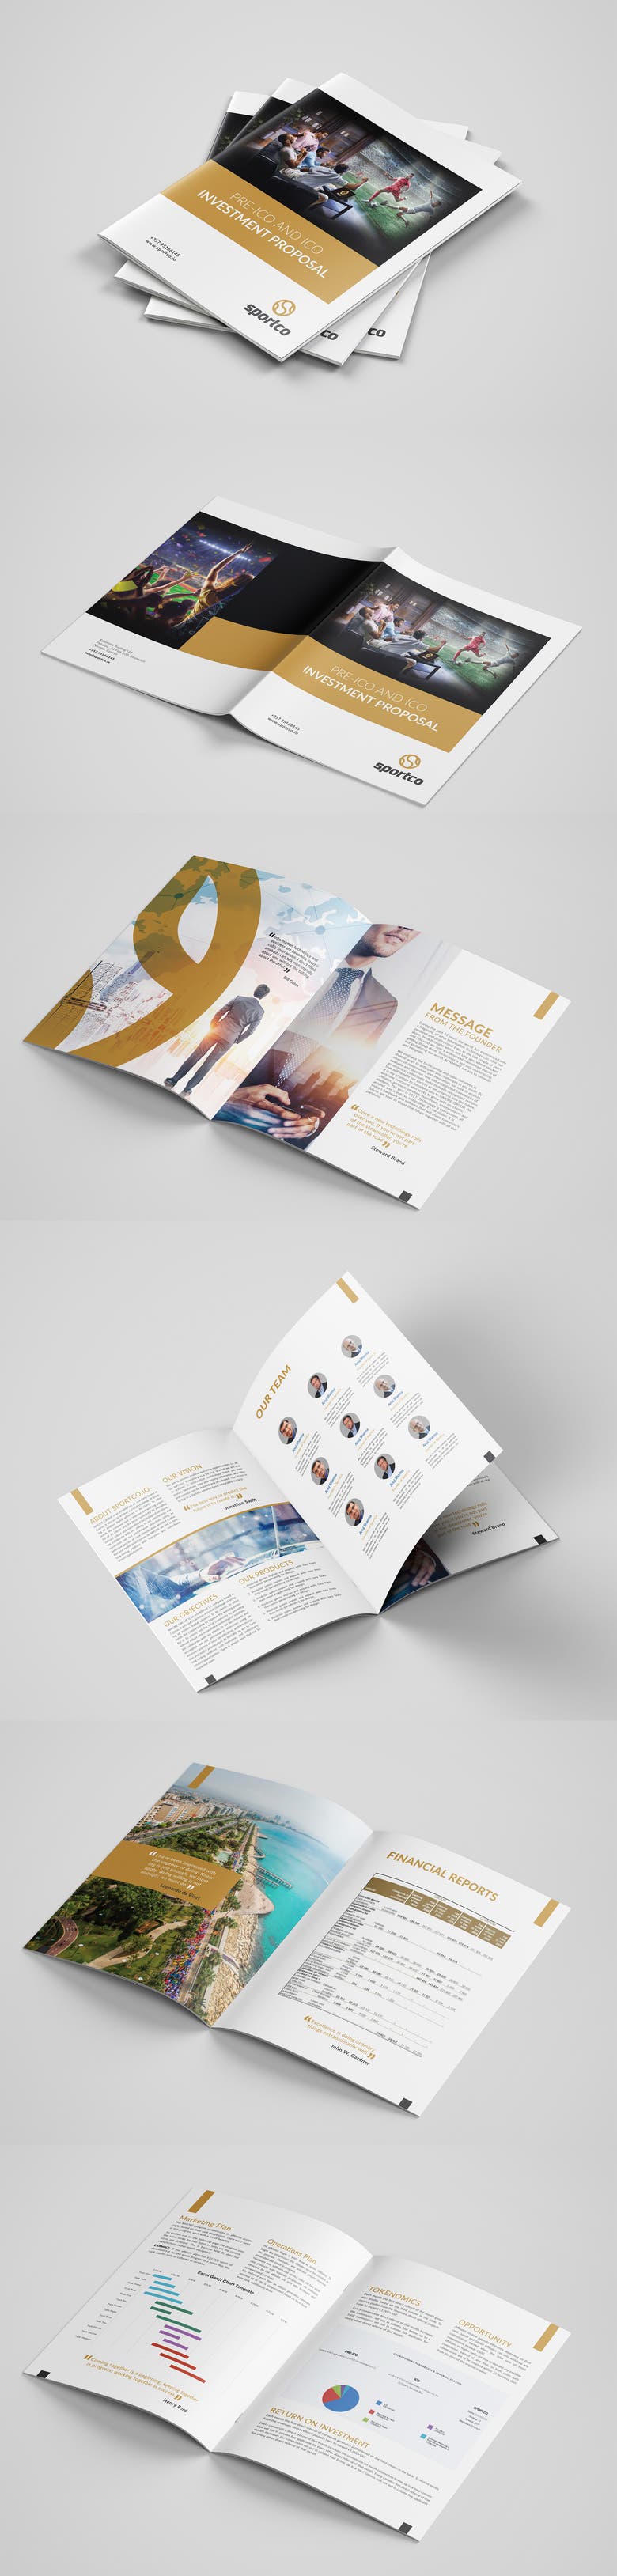 Bifold brochure design